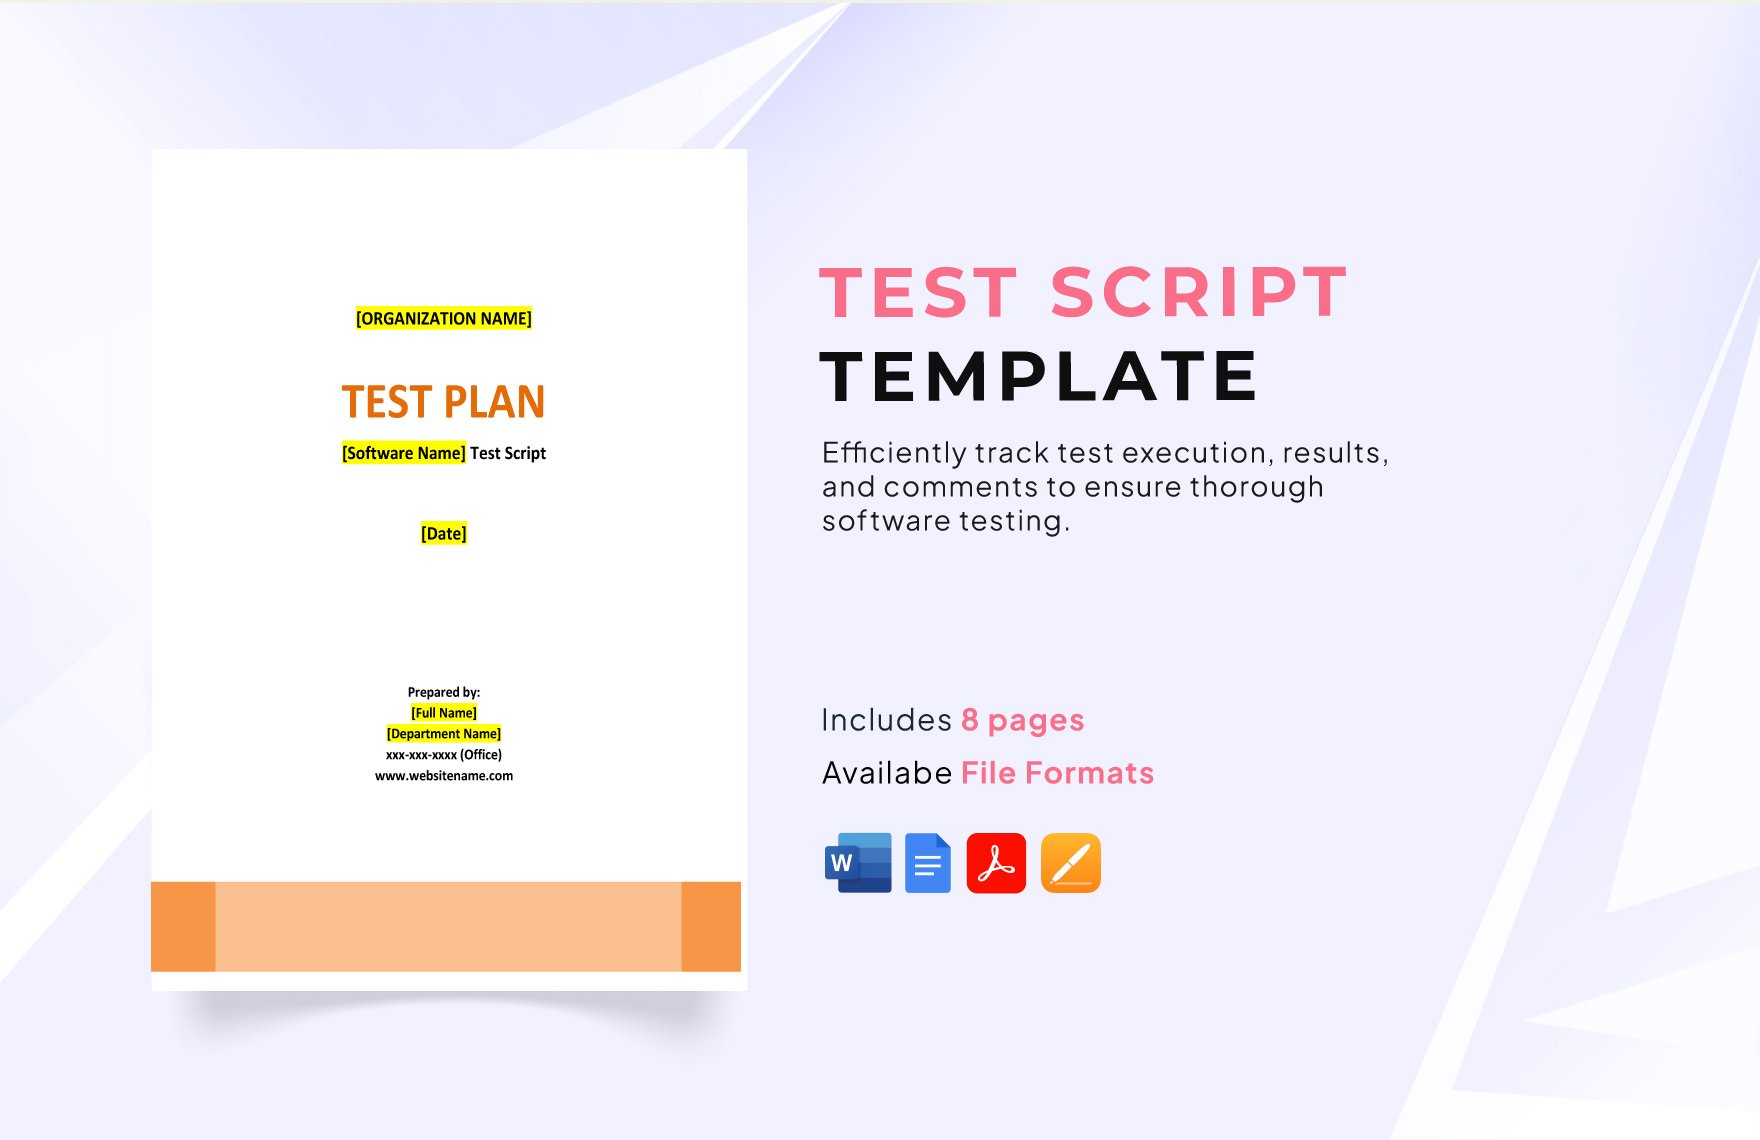 Test Script Template